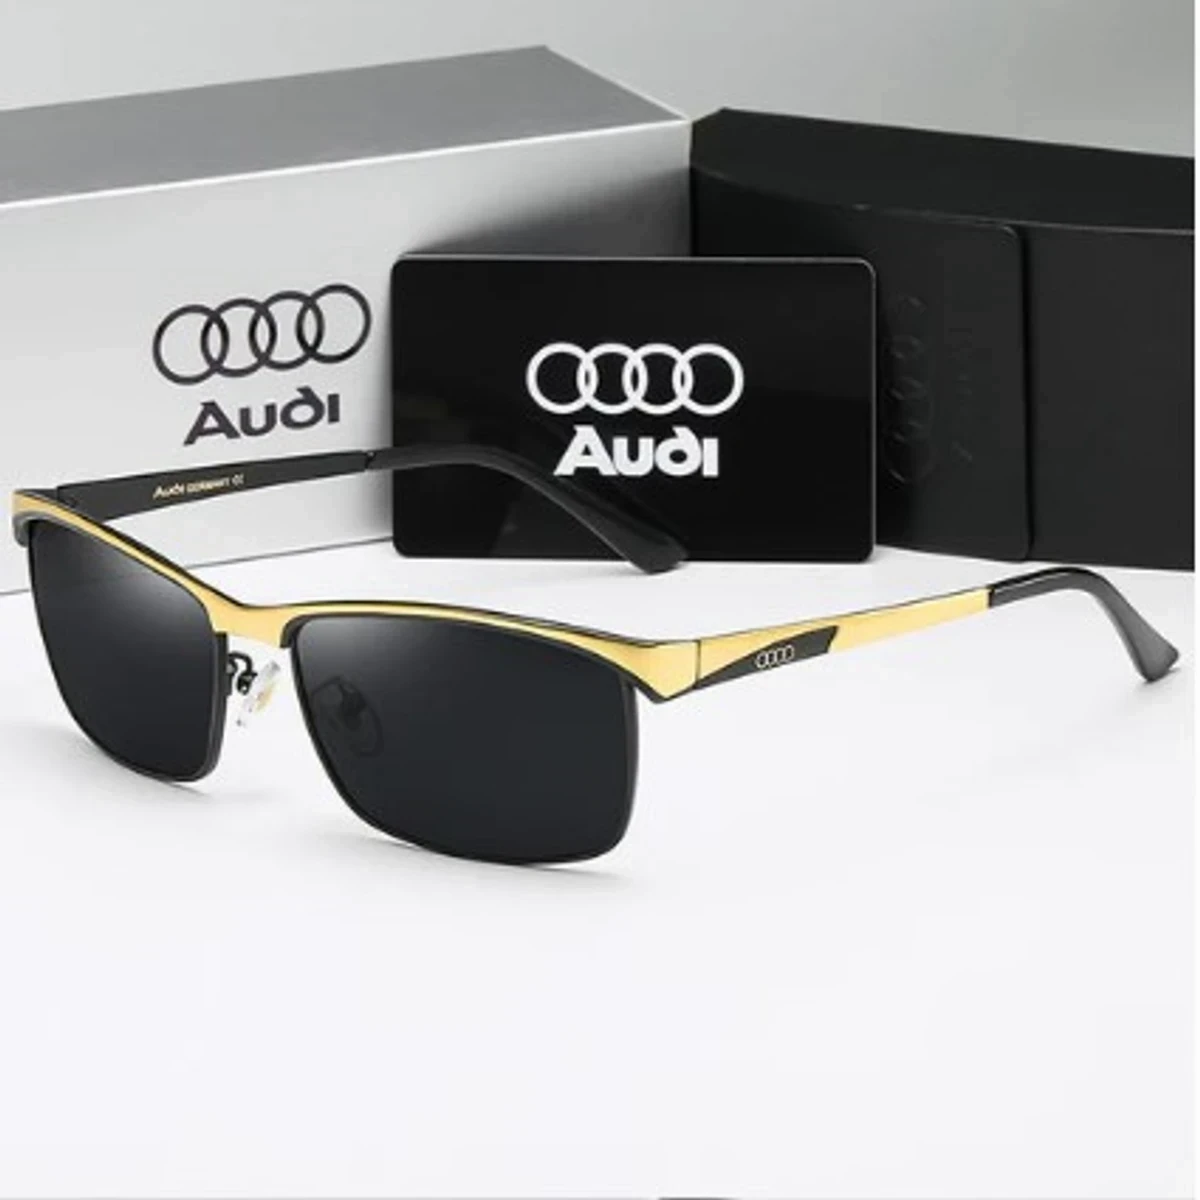 Audi Polarized Sunglasses